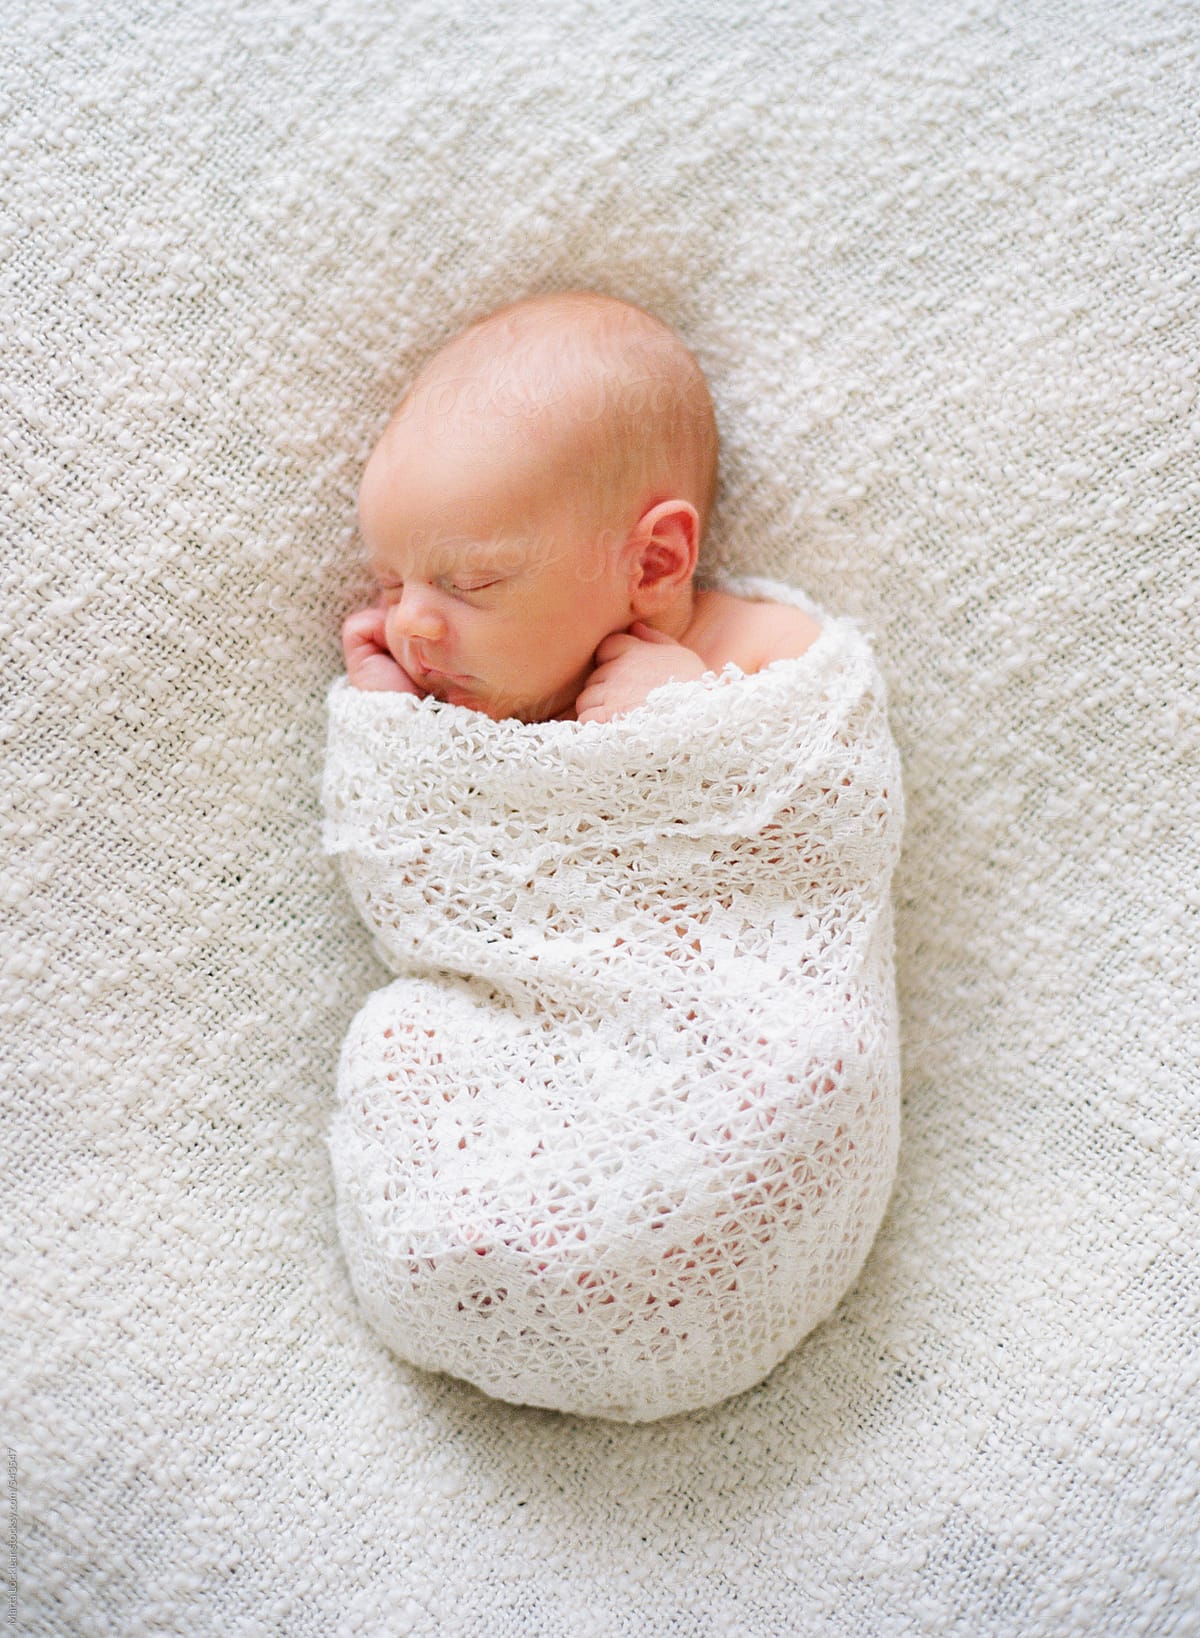 Newborn baby swaddled in a white blanket sleeping